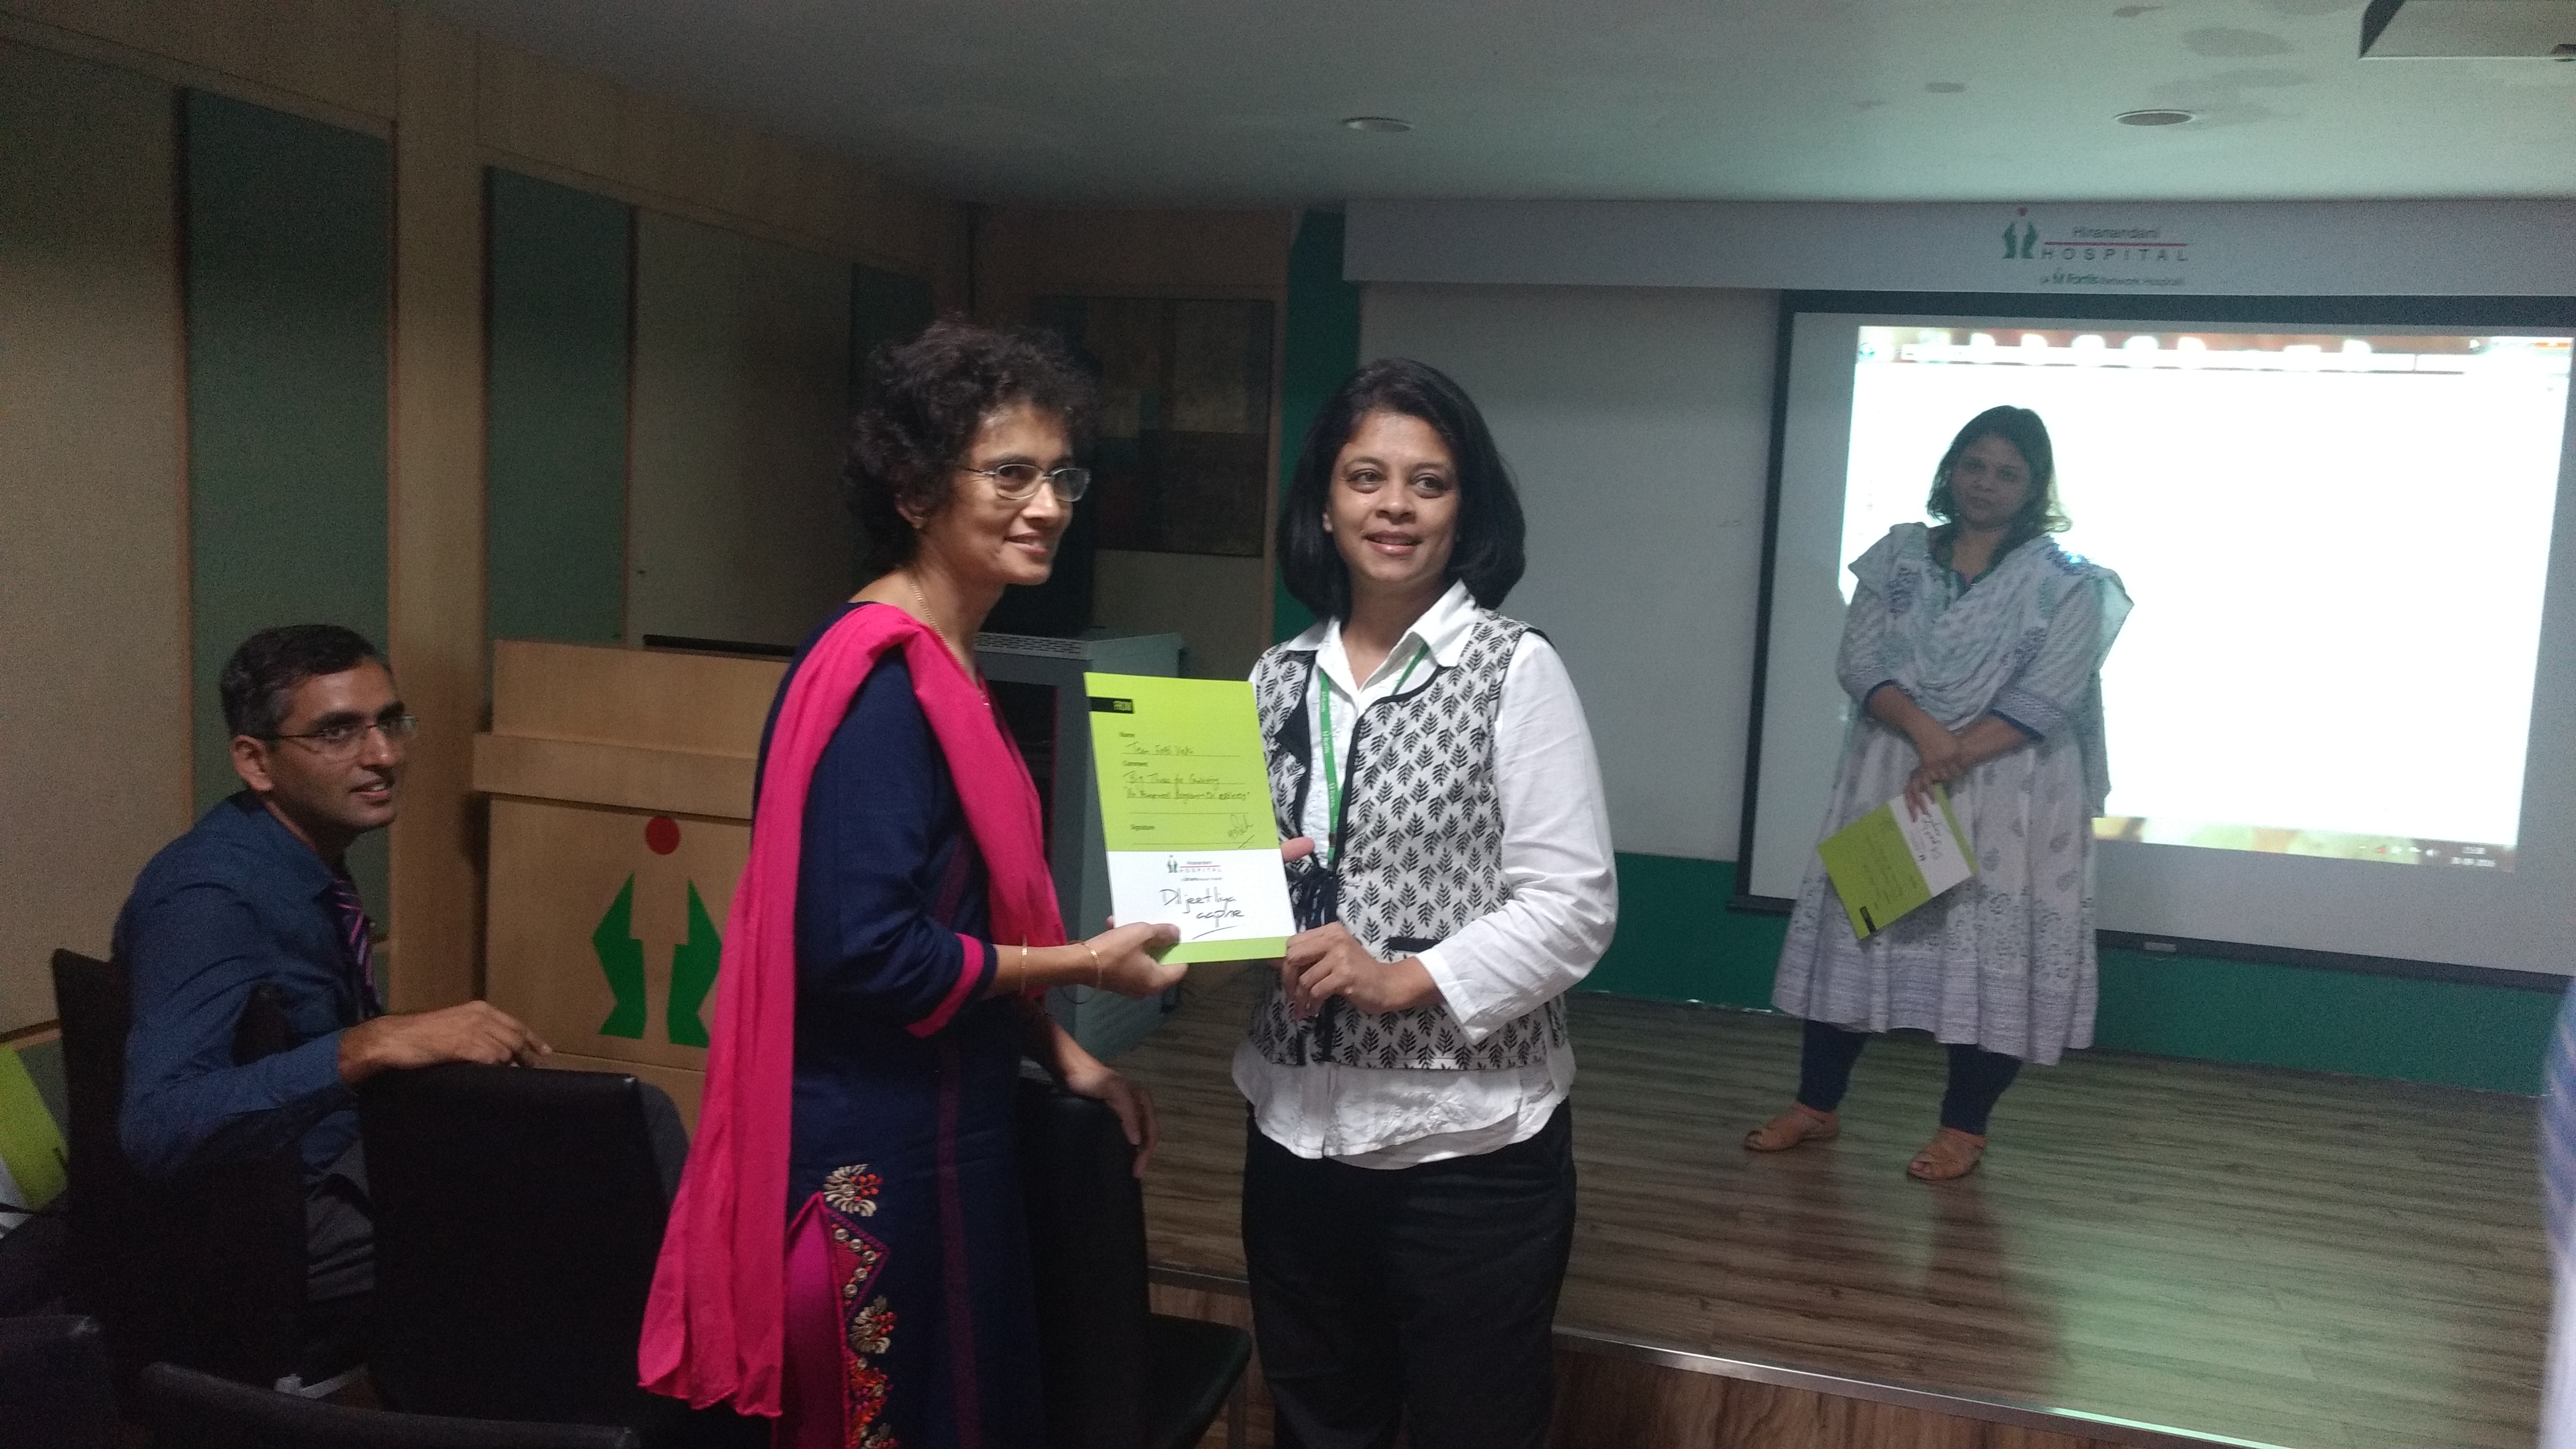 The Dean of Fortis Hiranandani Hospital, Vashi presenting certificates to Pooja & Carol